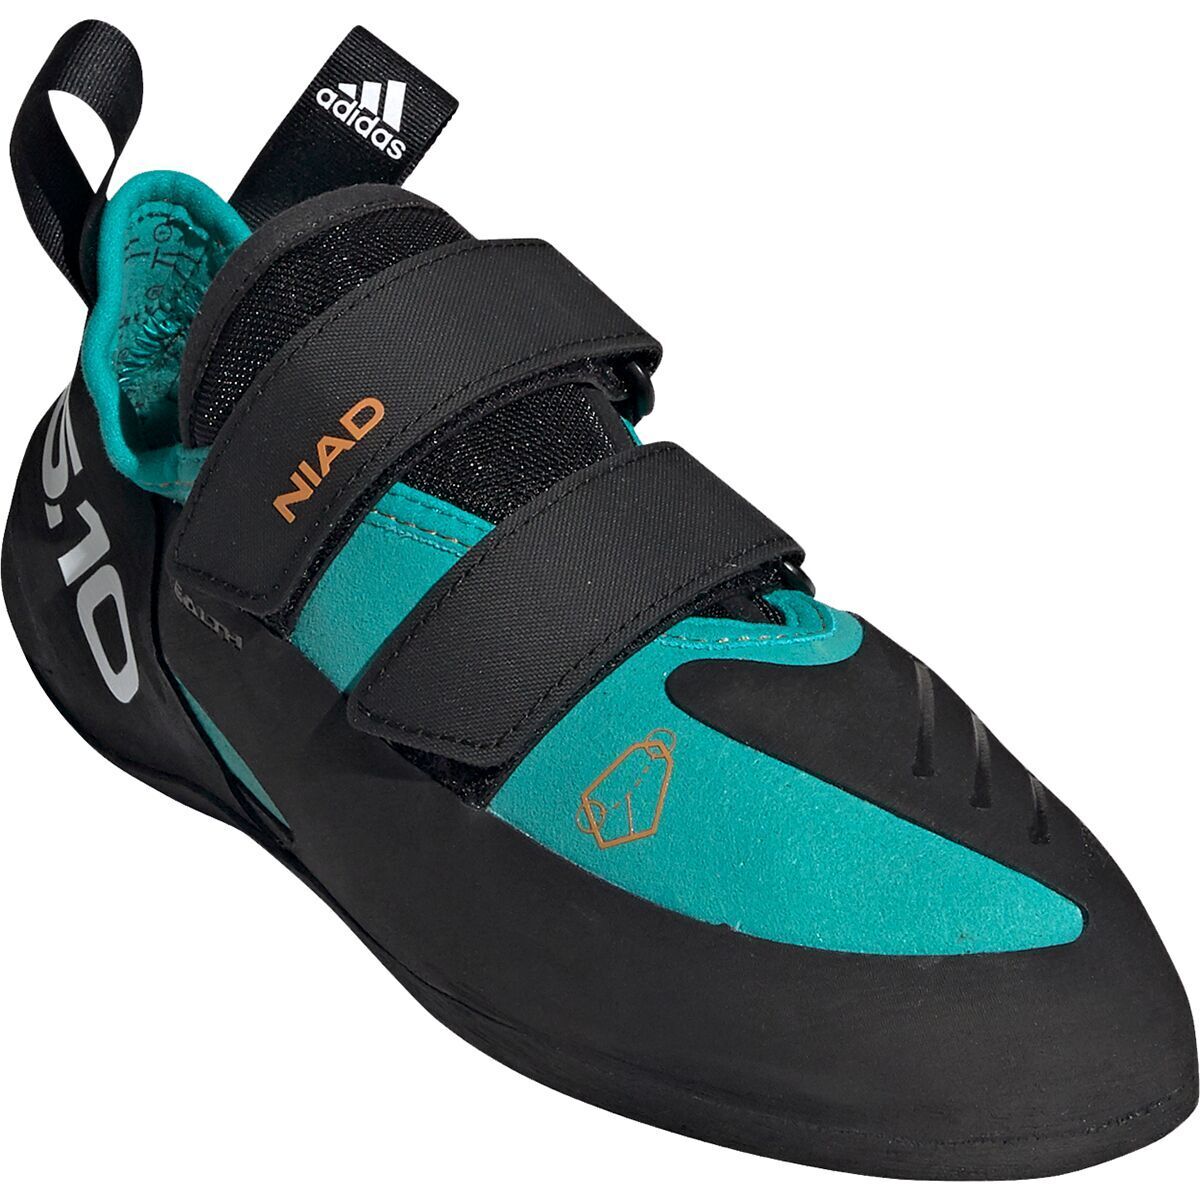 Five Ten Anasazi LV Low Hook N Loop Climbing Shoes Aqua Blue Black Womens  Size 9